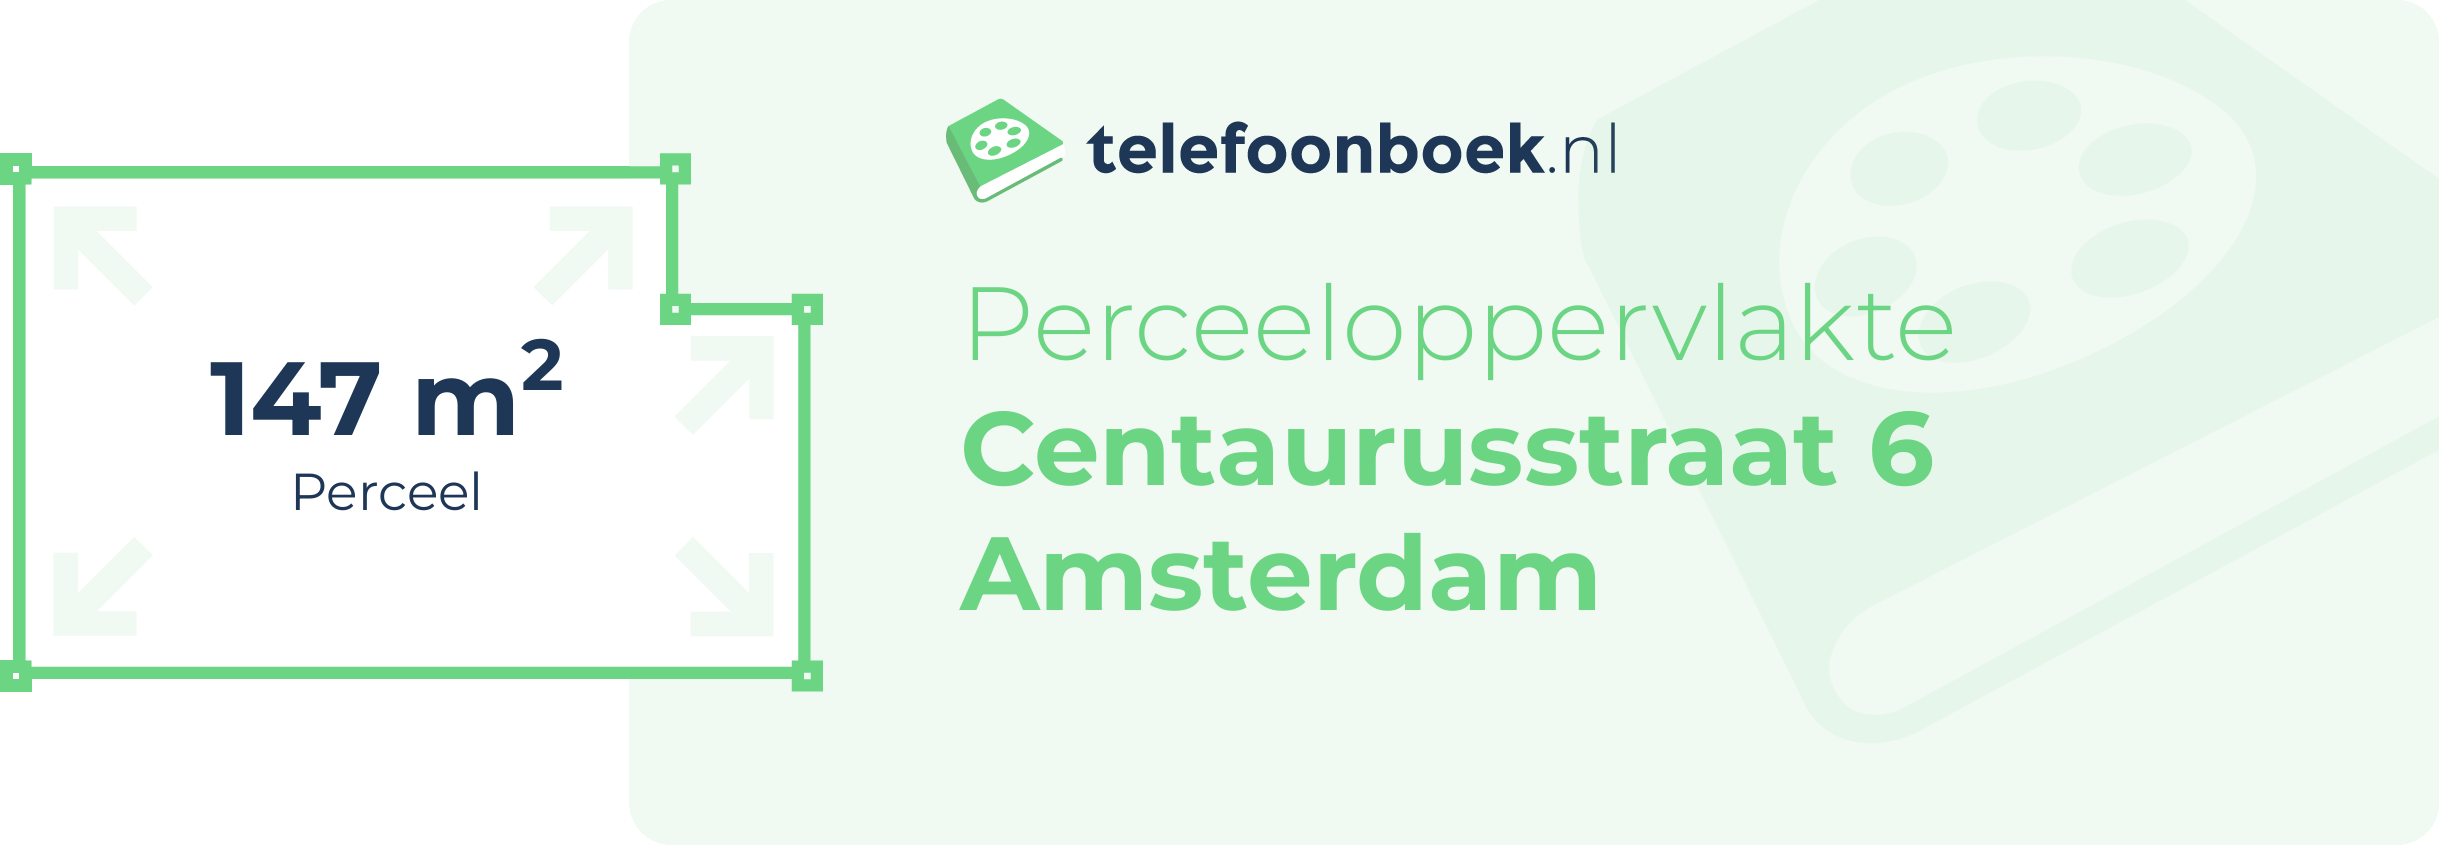 Perceeloppervlakte Centaurusstraat 6 Amsterdam